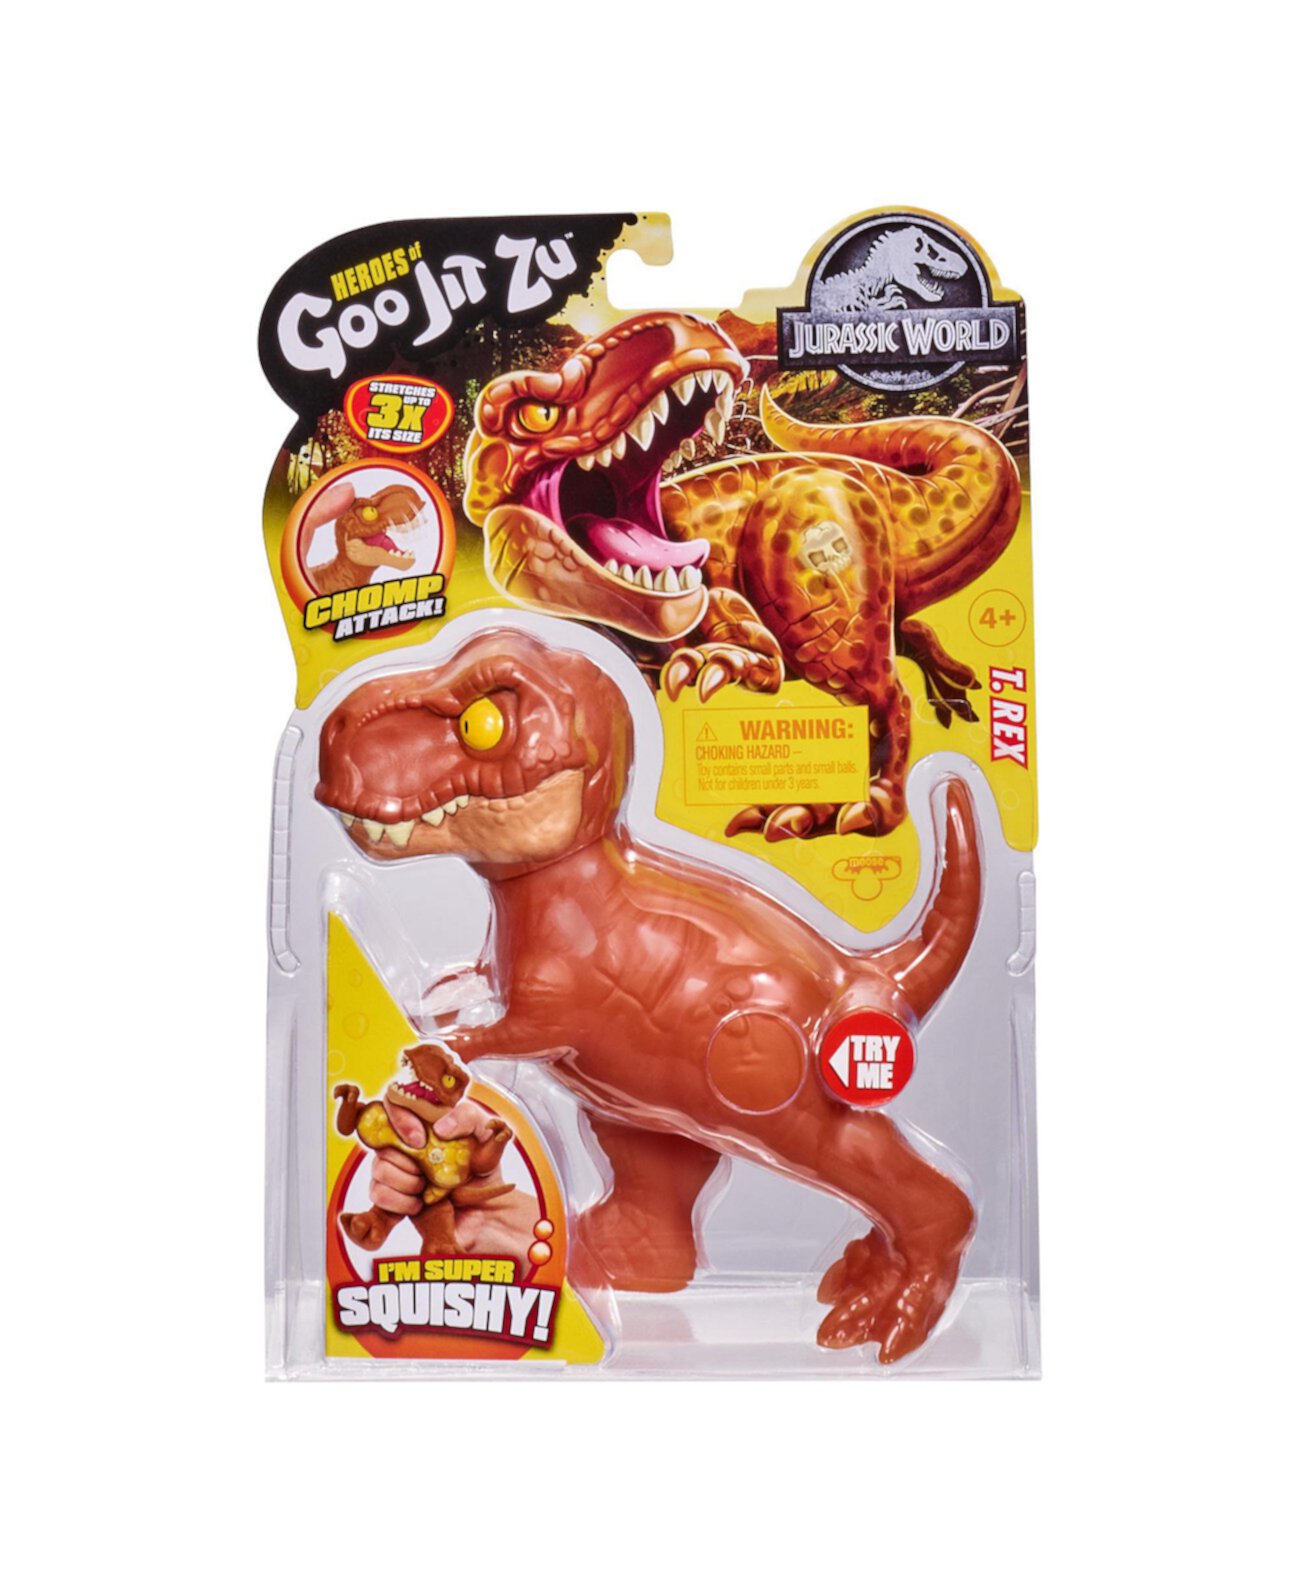 Jurassic World Dino Hero Series 2 Toy-Chomp Attack T-Rex Heroes of Goo Jit Zu